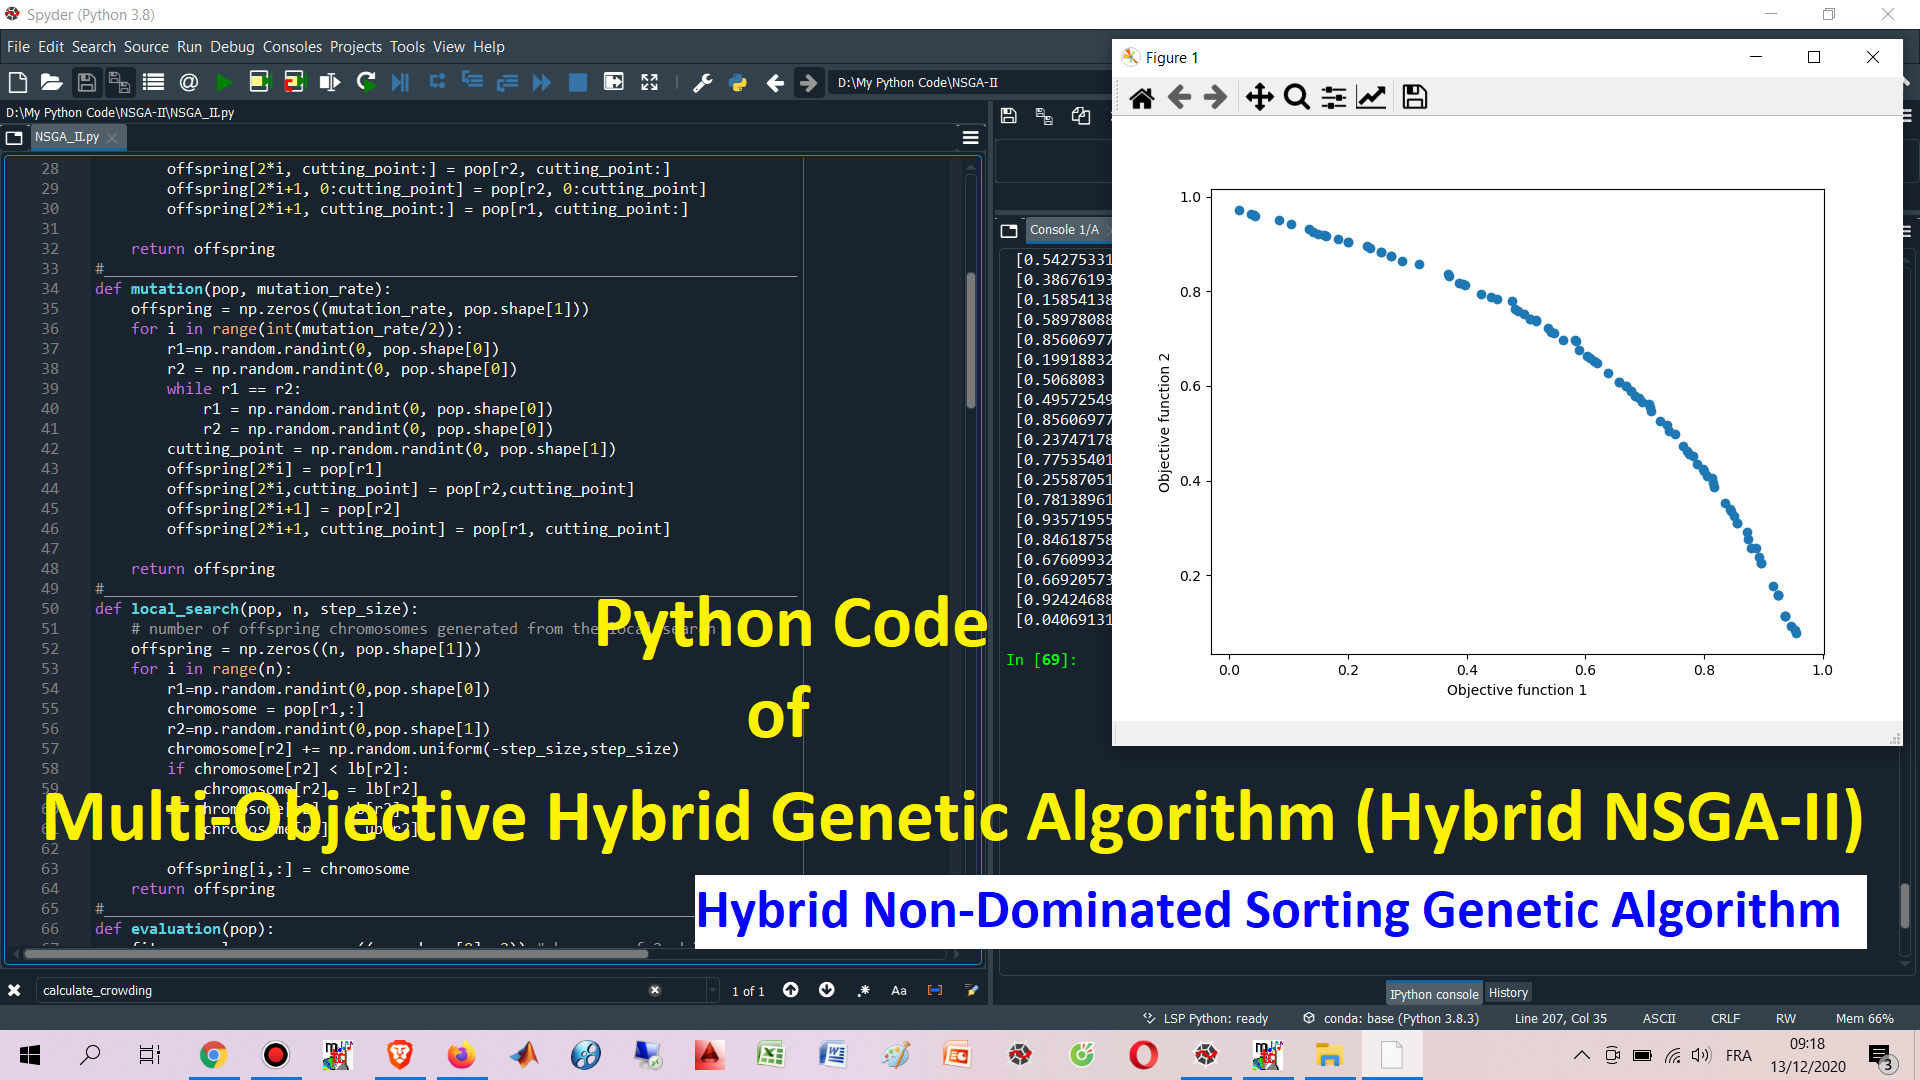 Python Code of Multi-Objective Hybrid Genetic Algorithm (Hybrid NSGA-II)